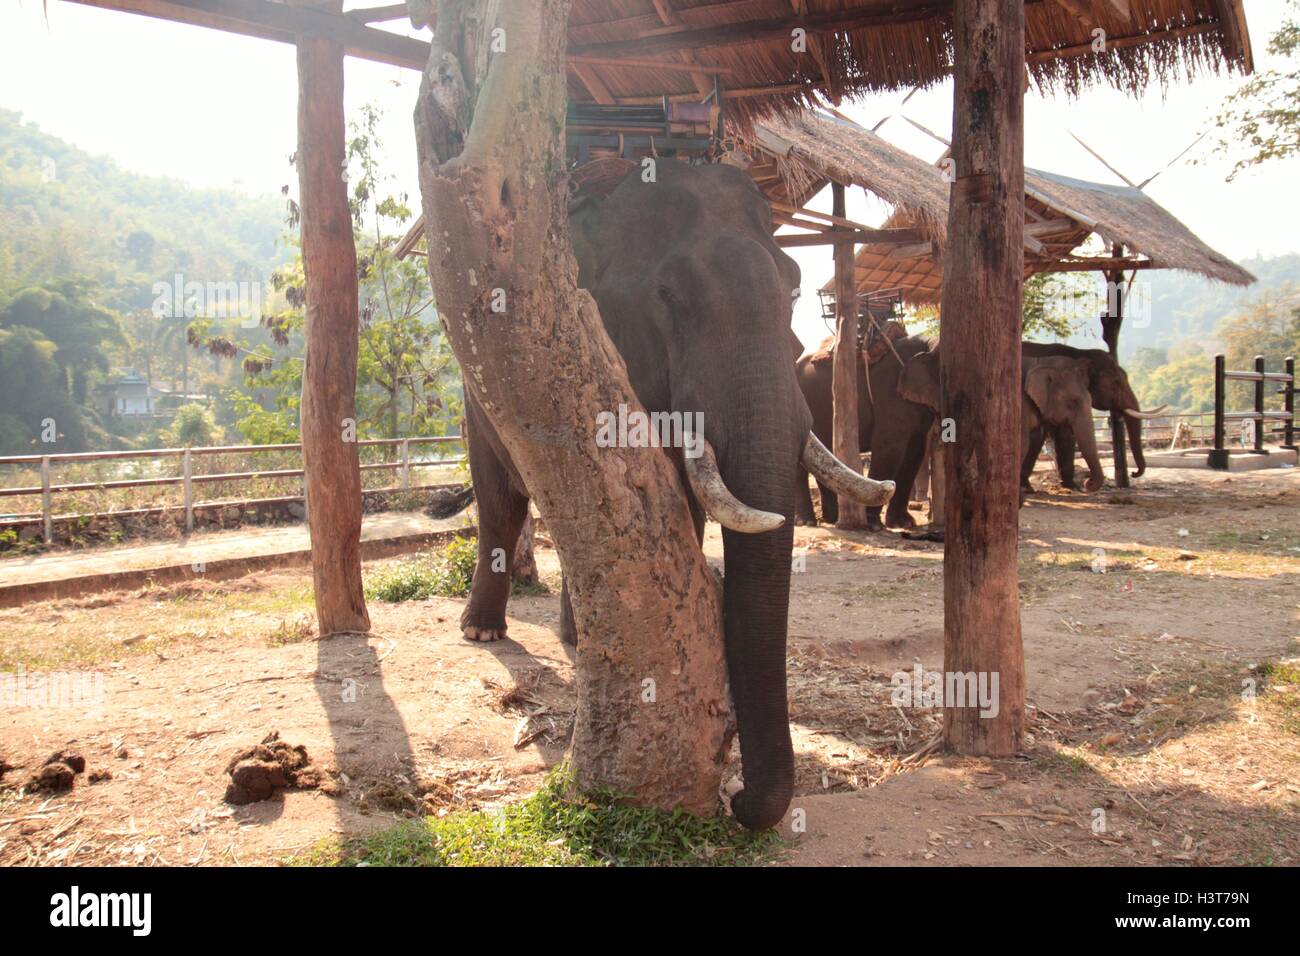 Thai elephant in park Stock Photo